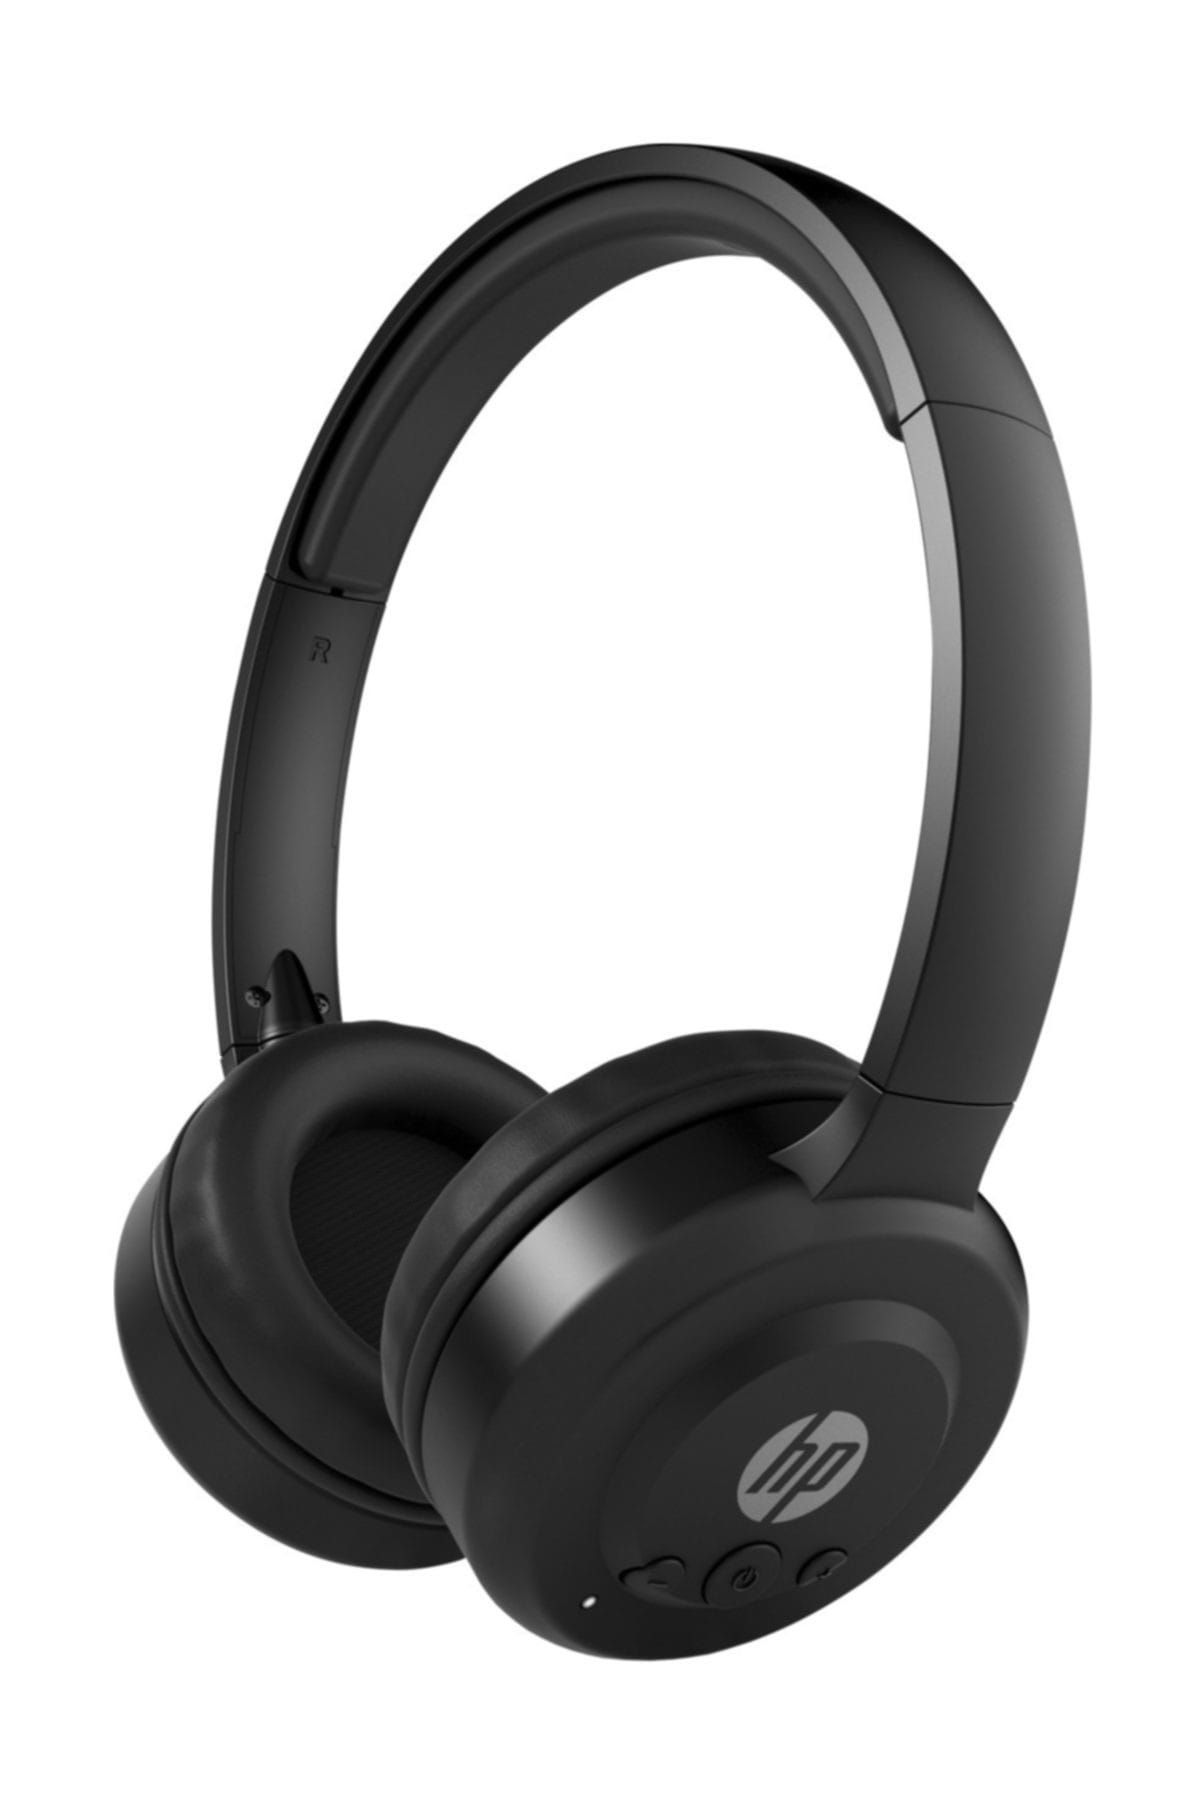 HP Pavilion 600 Kulaküstü Bluetooth Kulaklık Siyah 1SH06AA